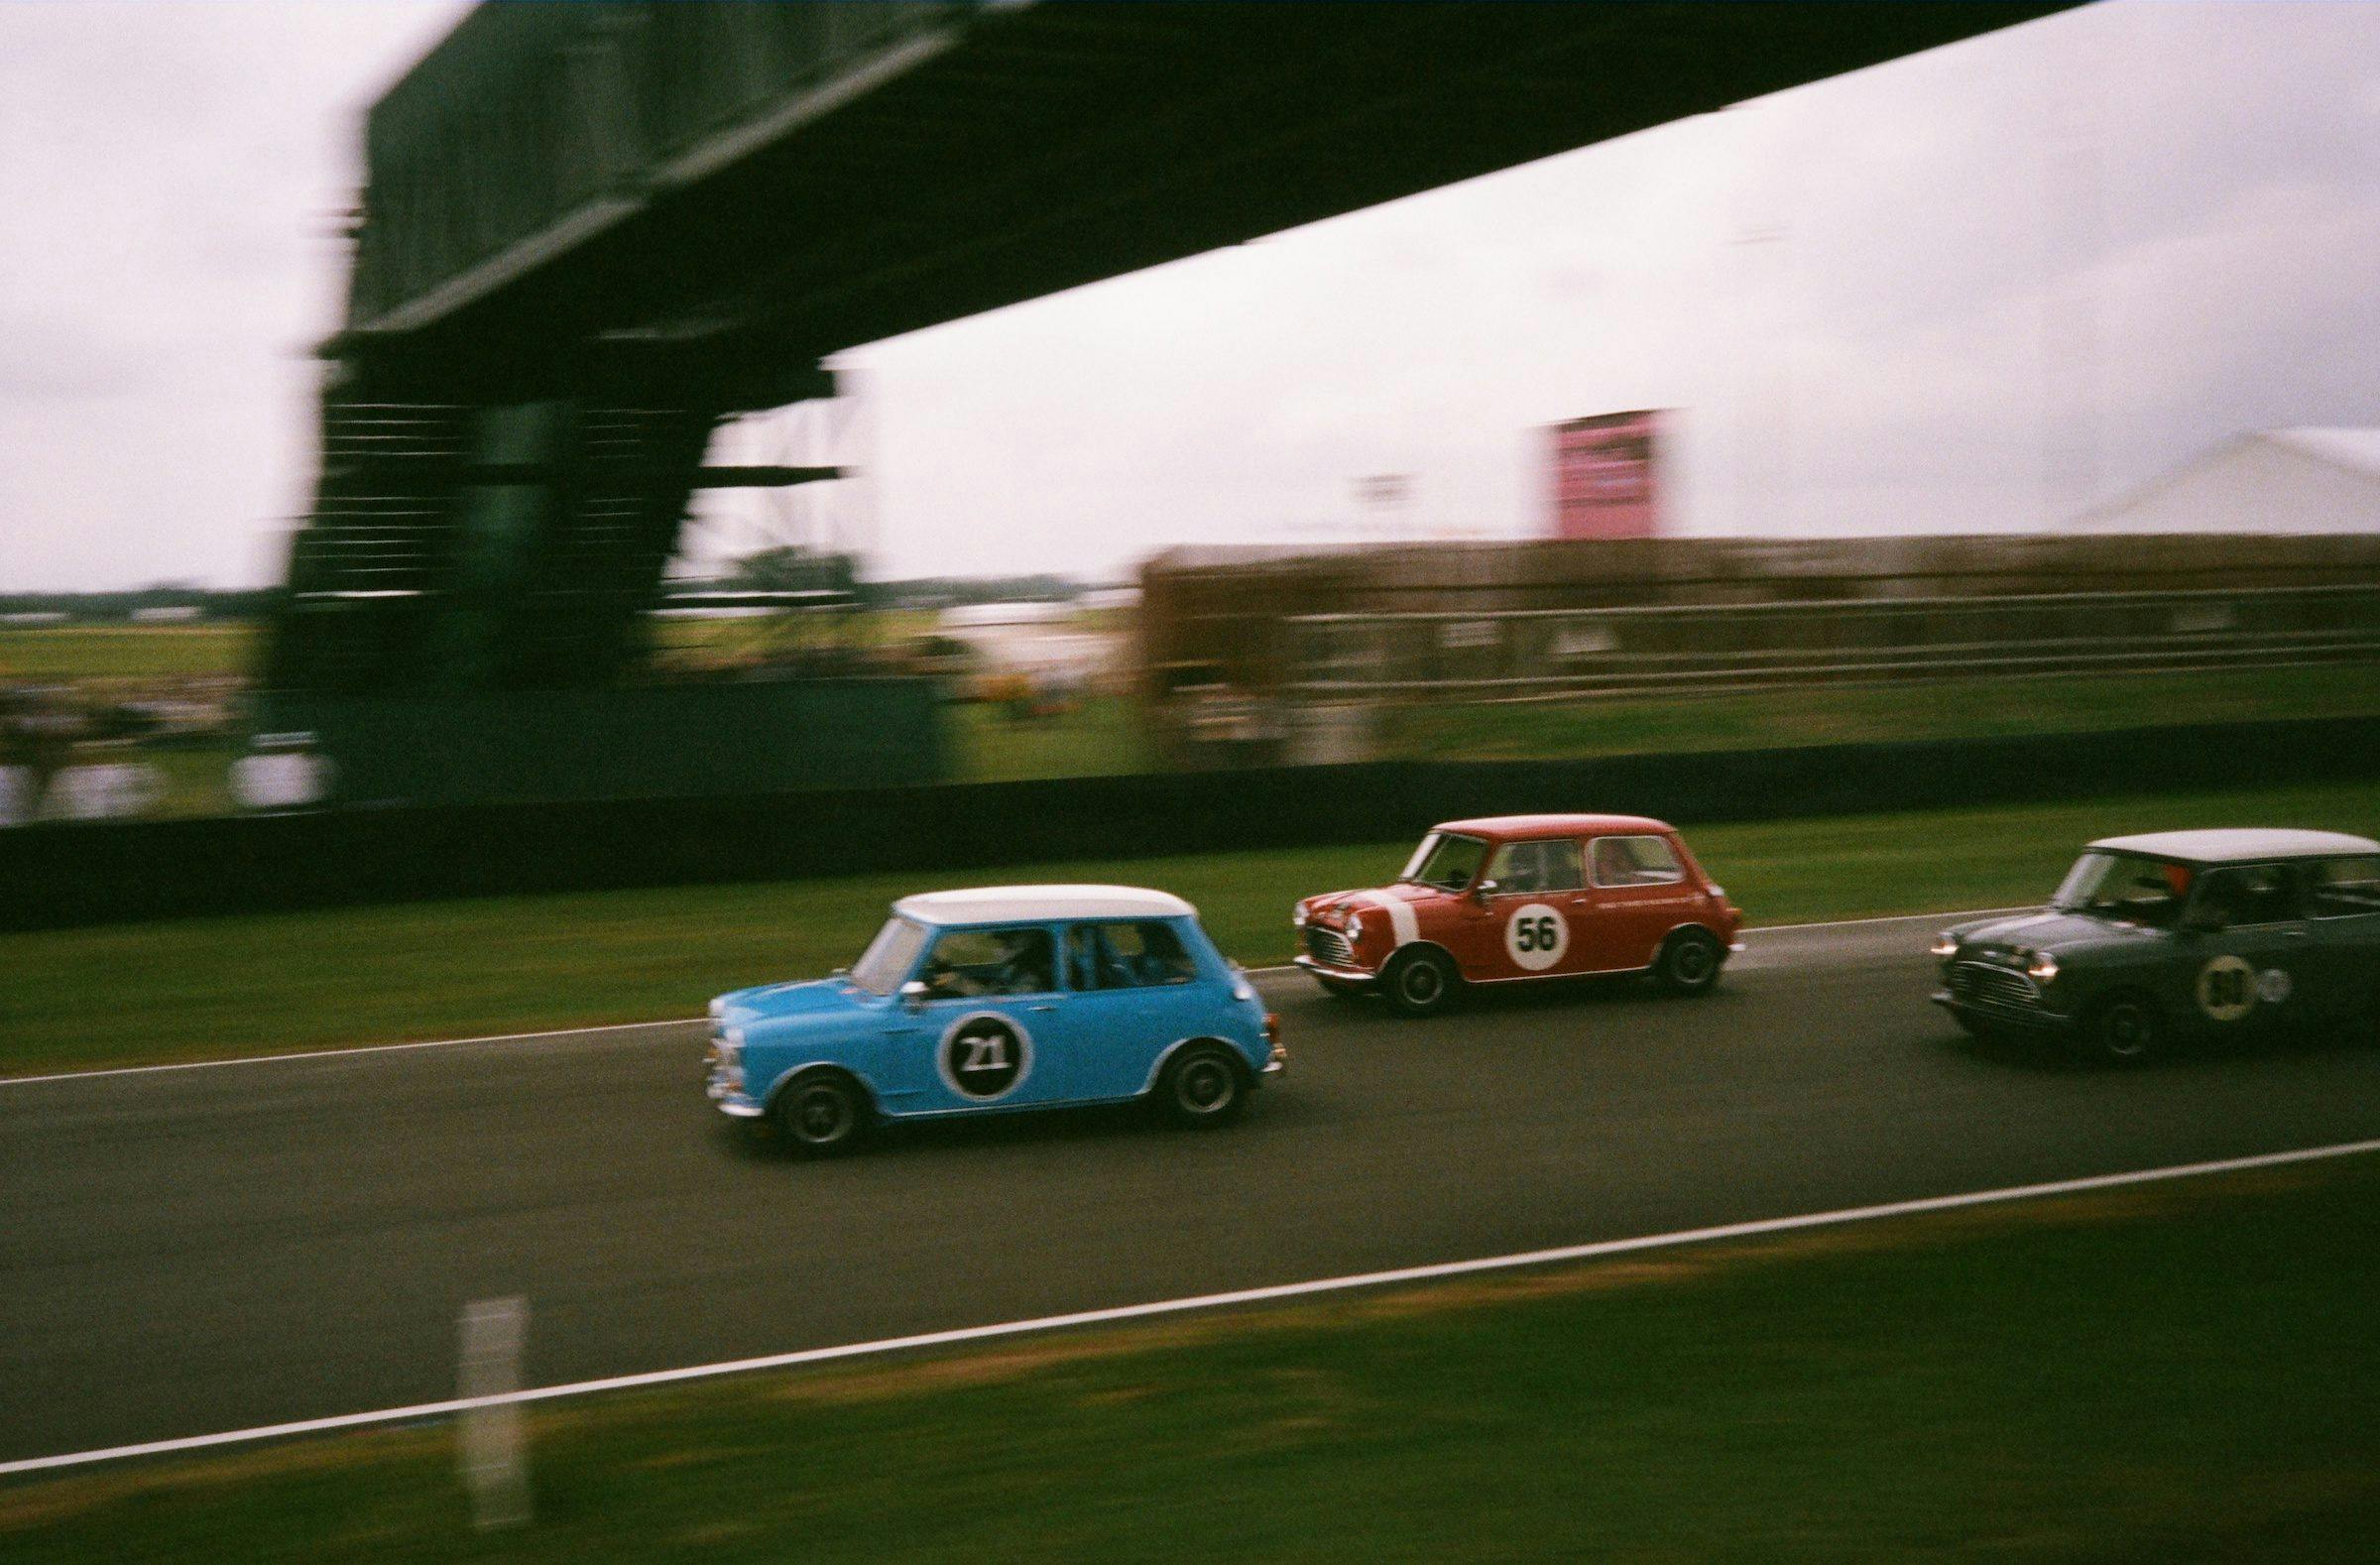 Goodwood Revival film mini racing action